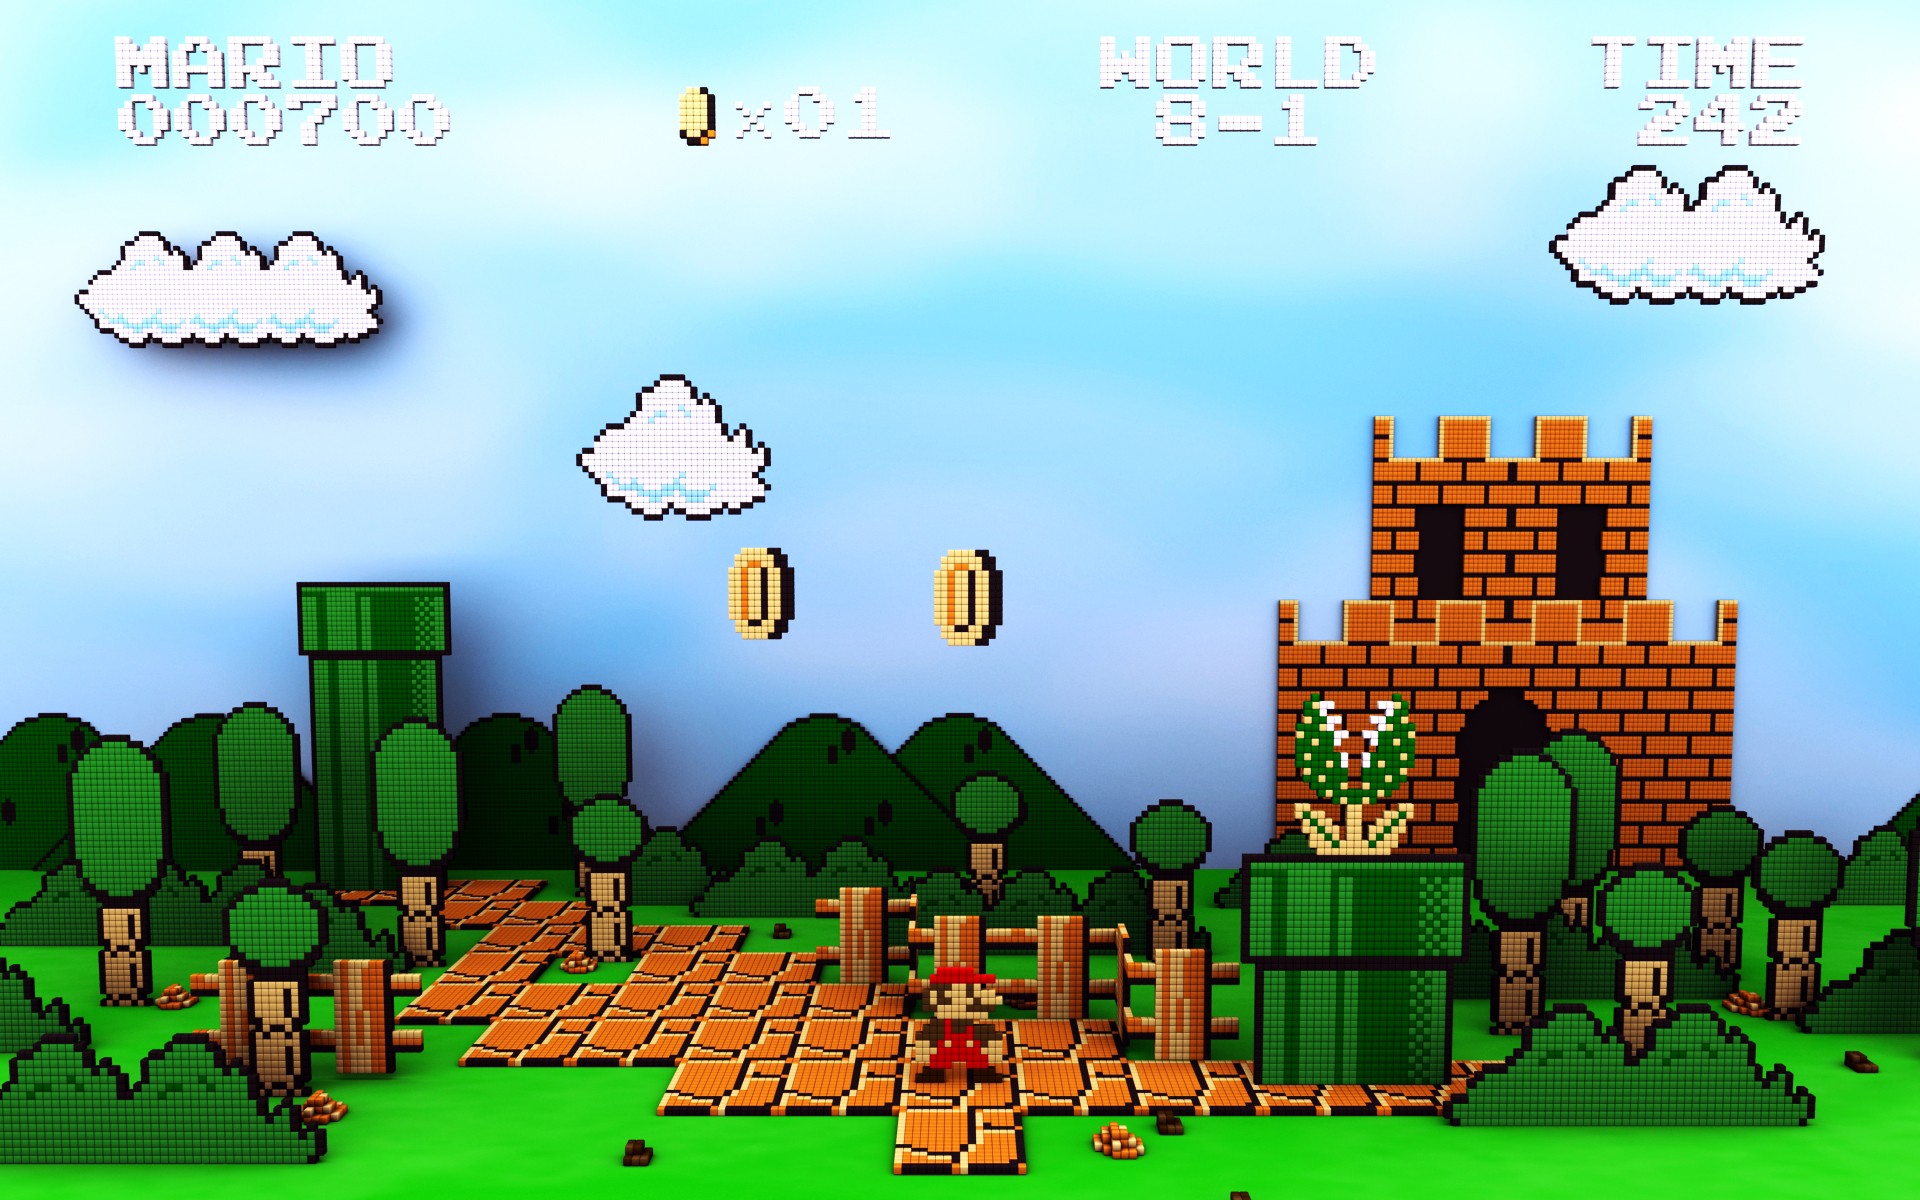 Mario Bros Retro Games Nintendo Entertainment System Pixel Art 8 Bit Video Games Wallpapers Hd Desktop And Mobile Backgrounds